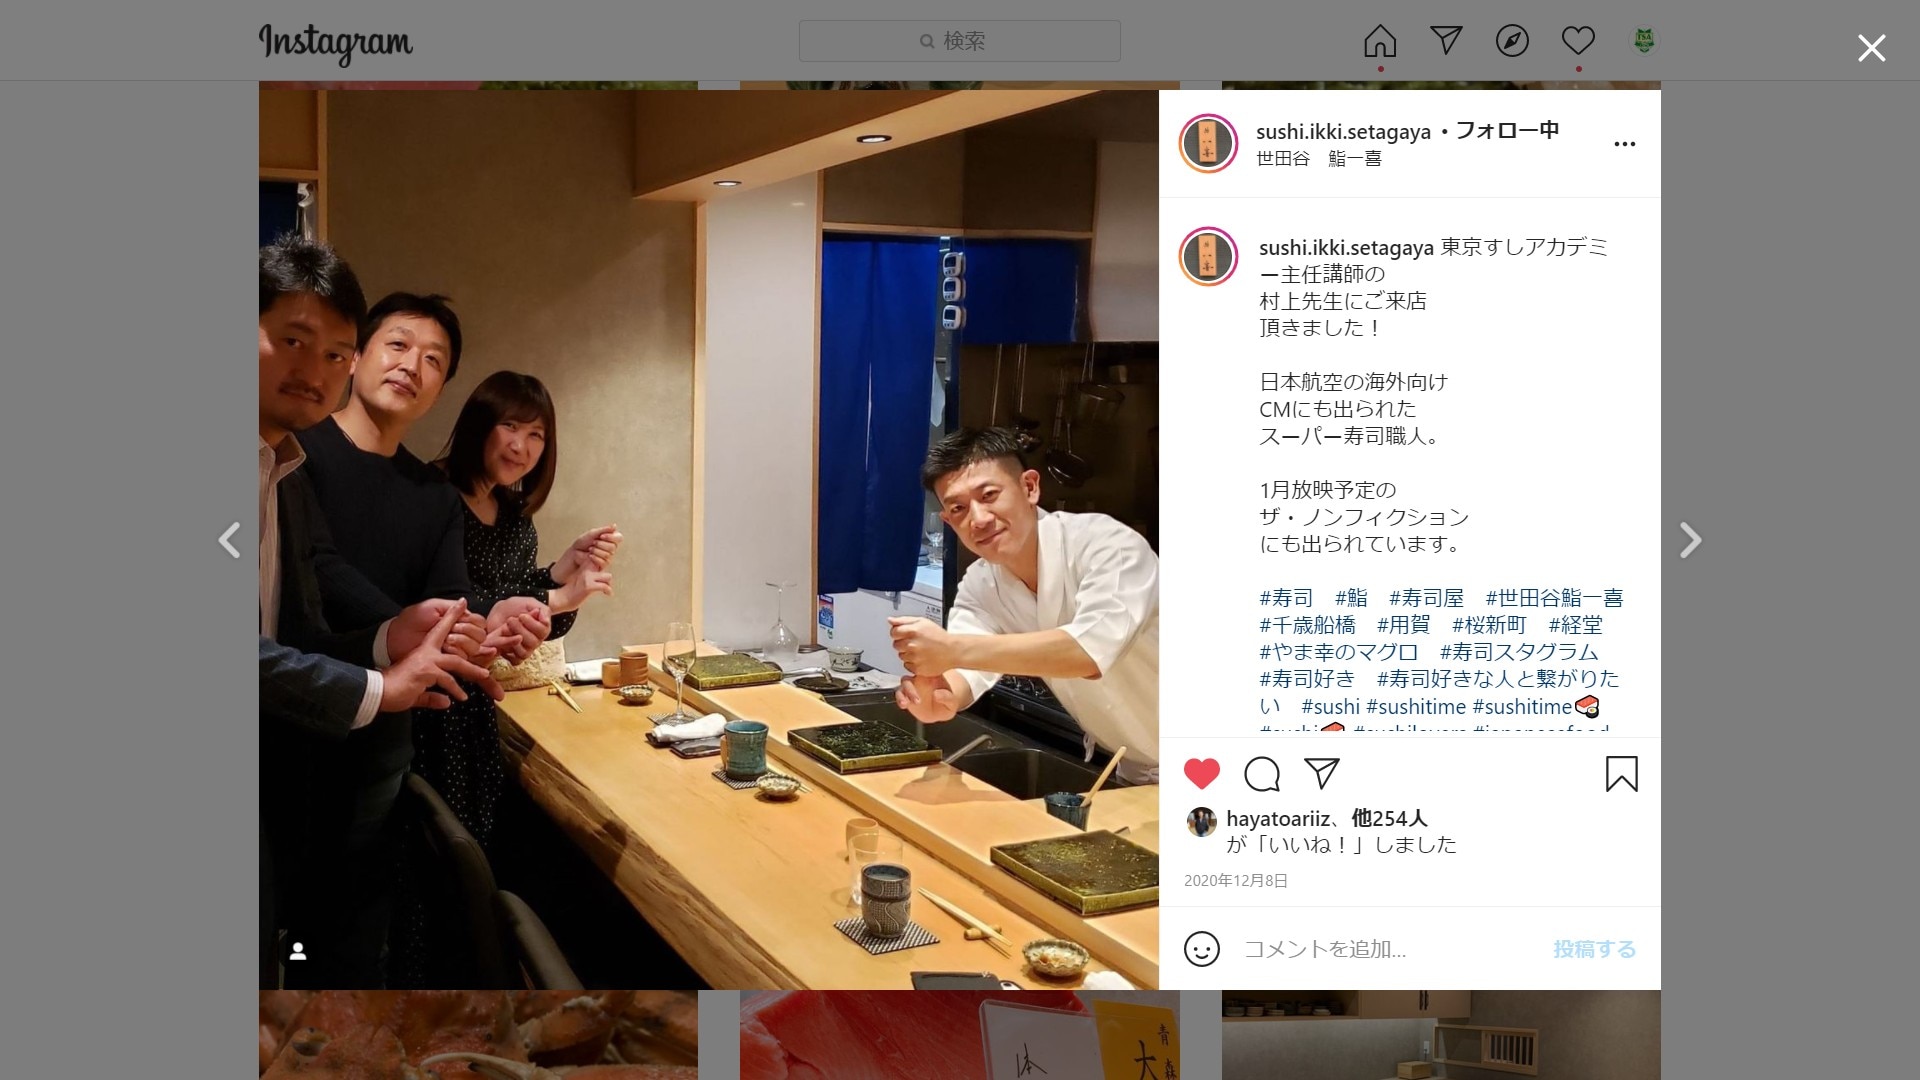 Web広告を手掛けるやり手経営者の新ビジネスは寿司屋の経営 東京すしアカデミー 寿司職人養成学校